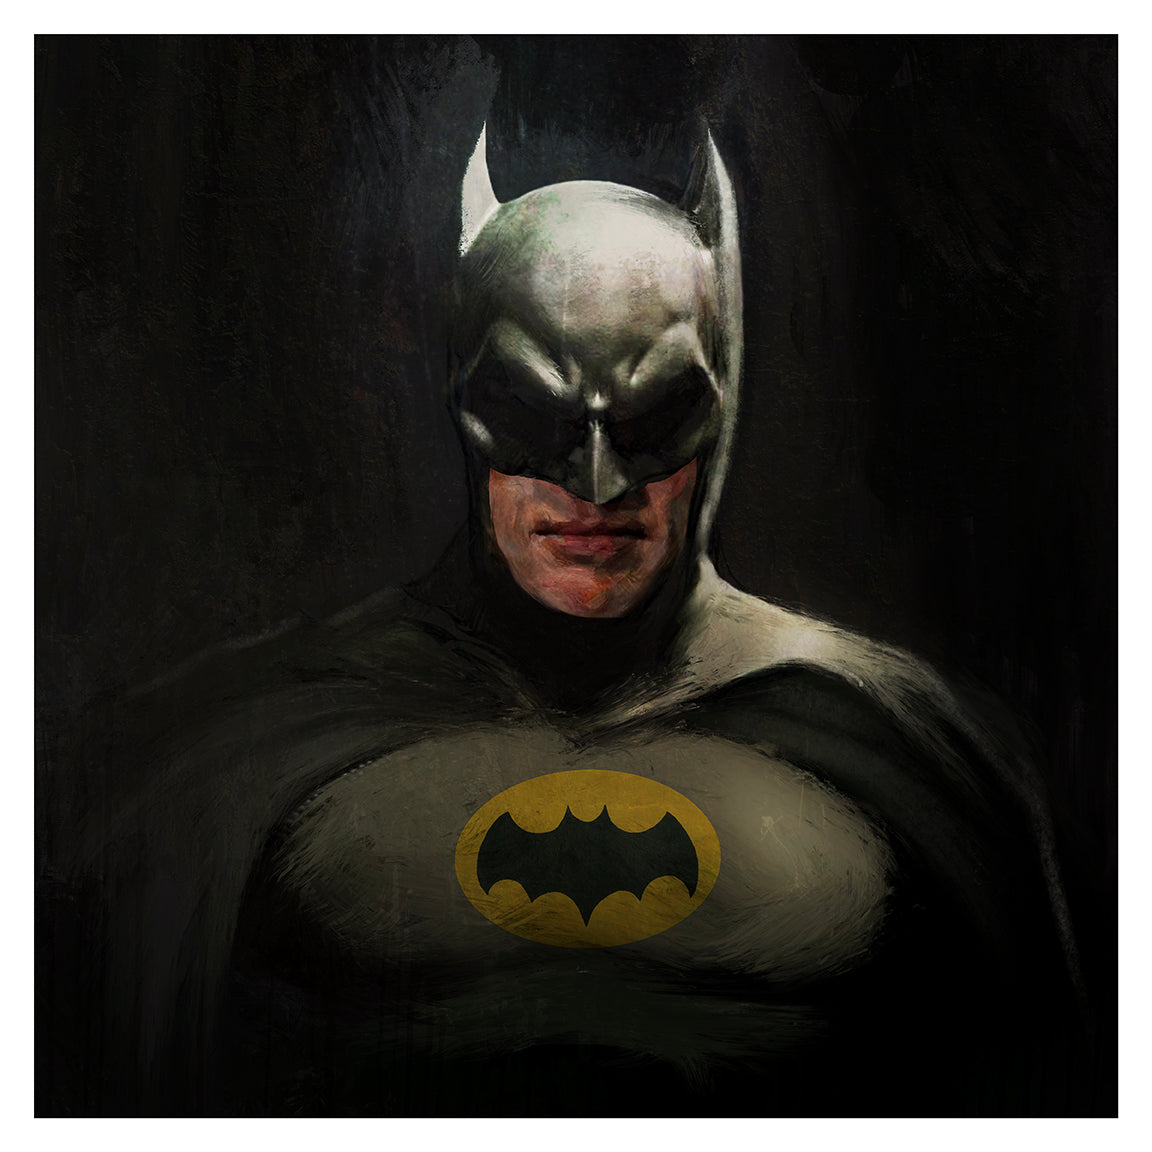 Mark Chilcott "Batman"